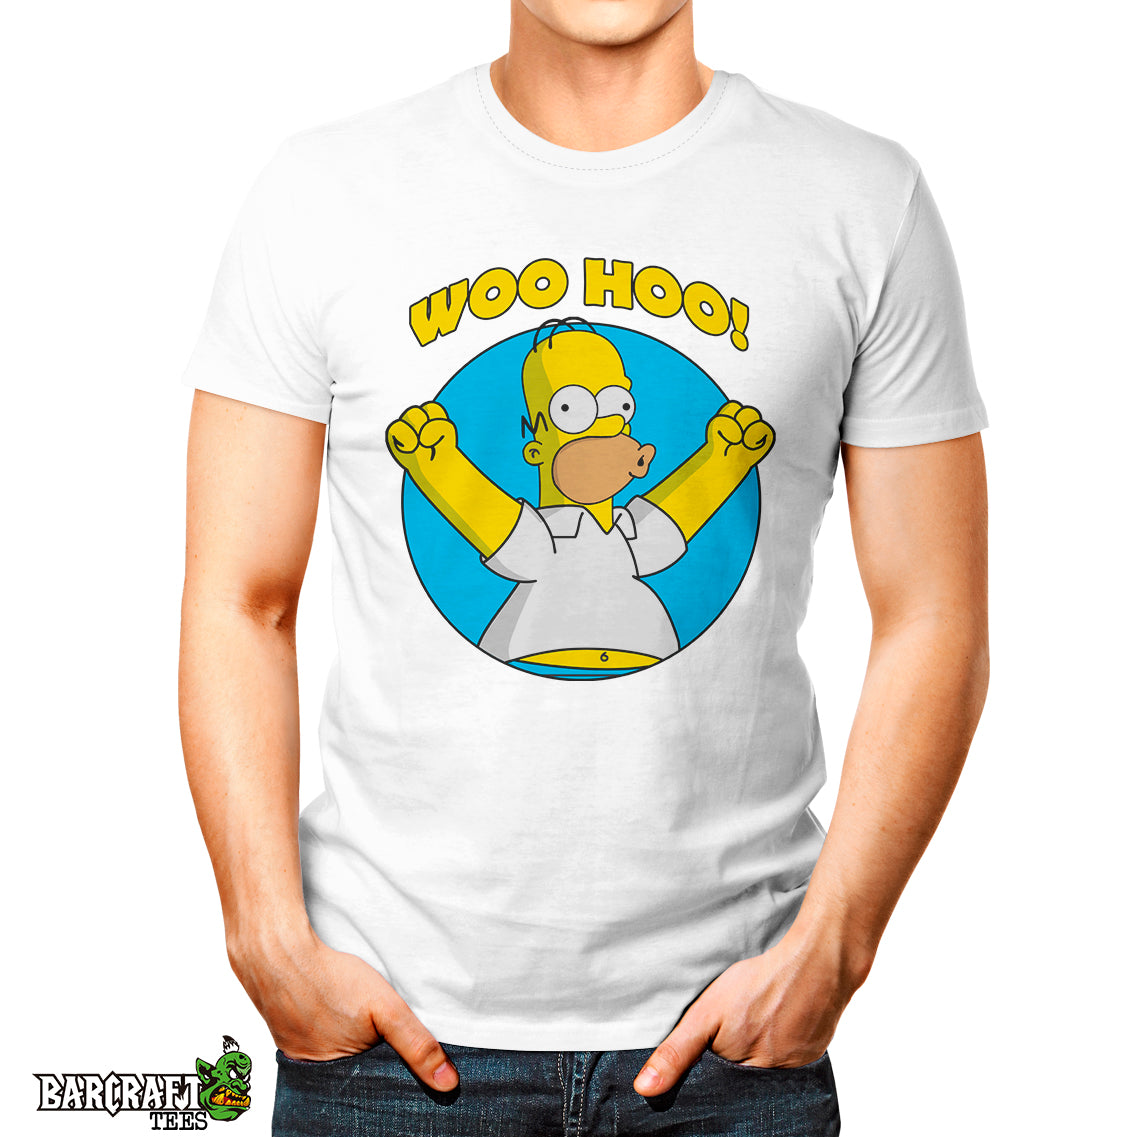 Homero Whoo hoo!